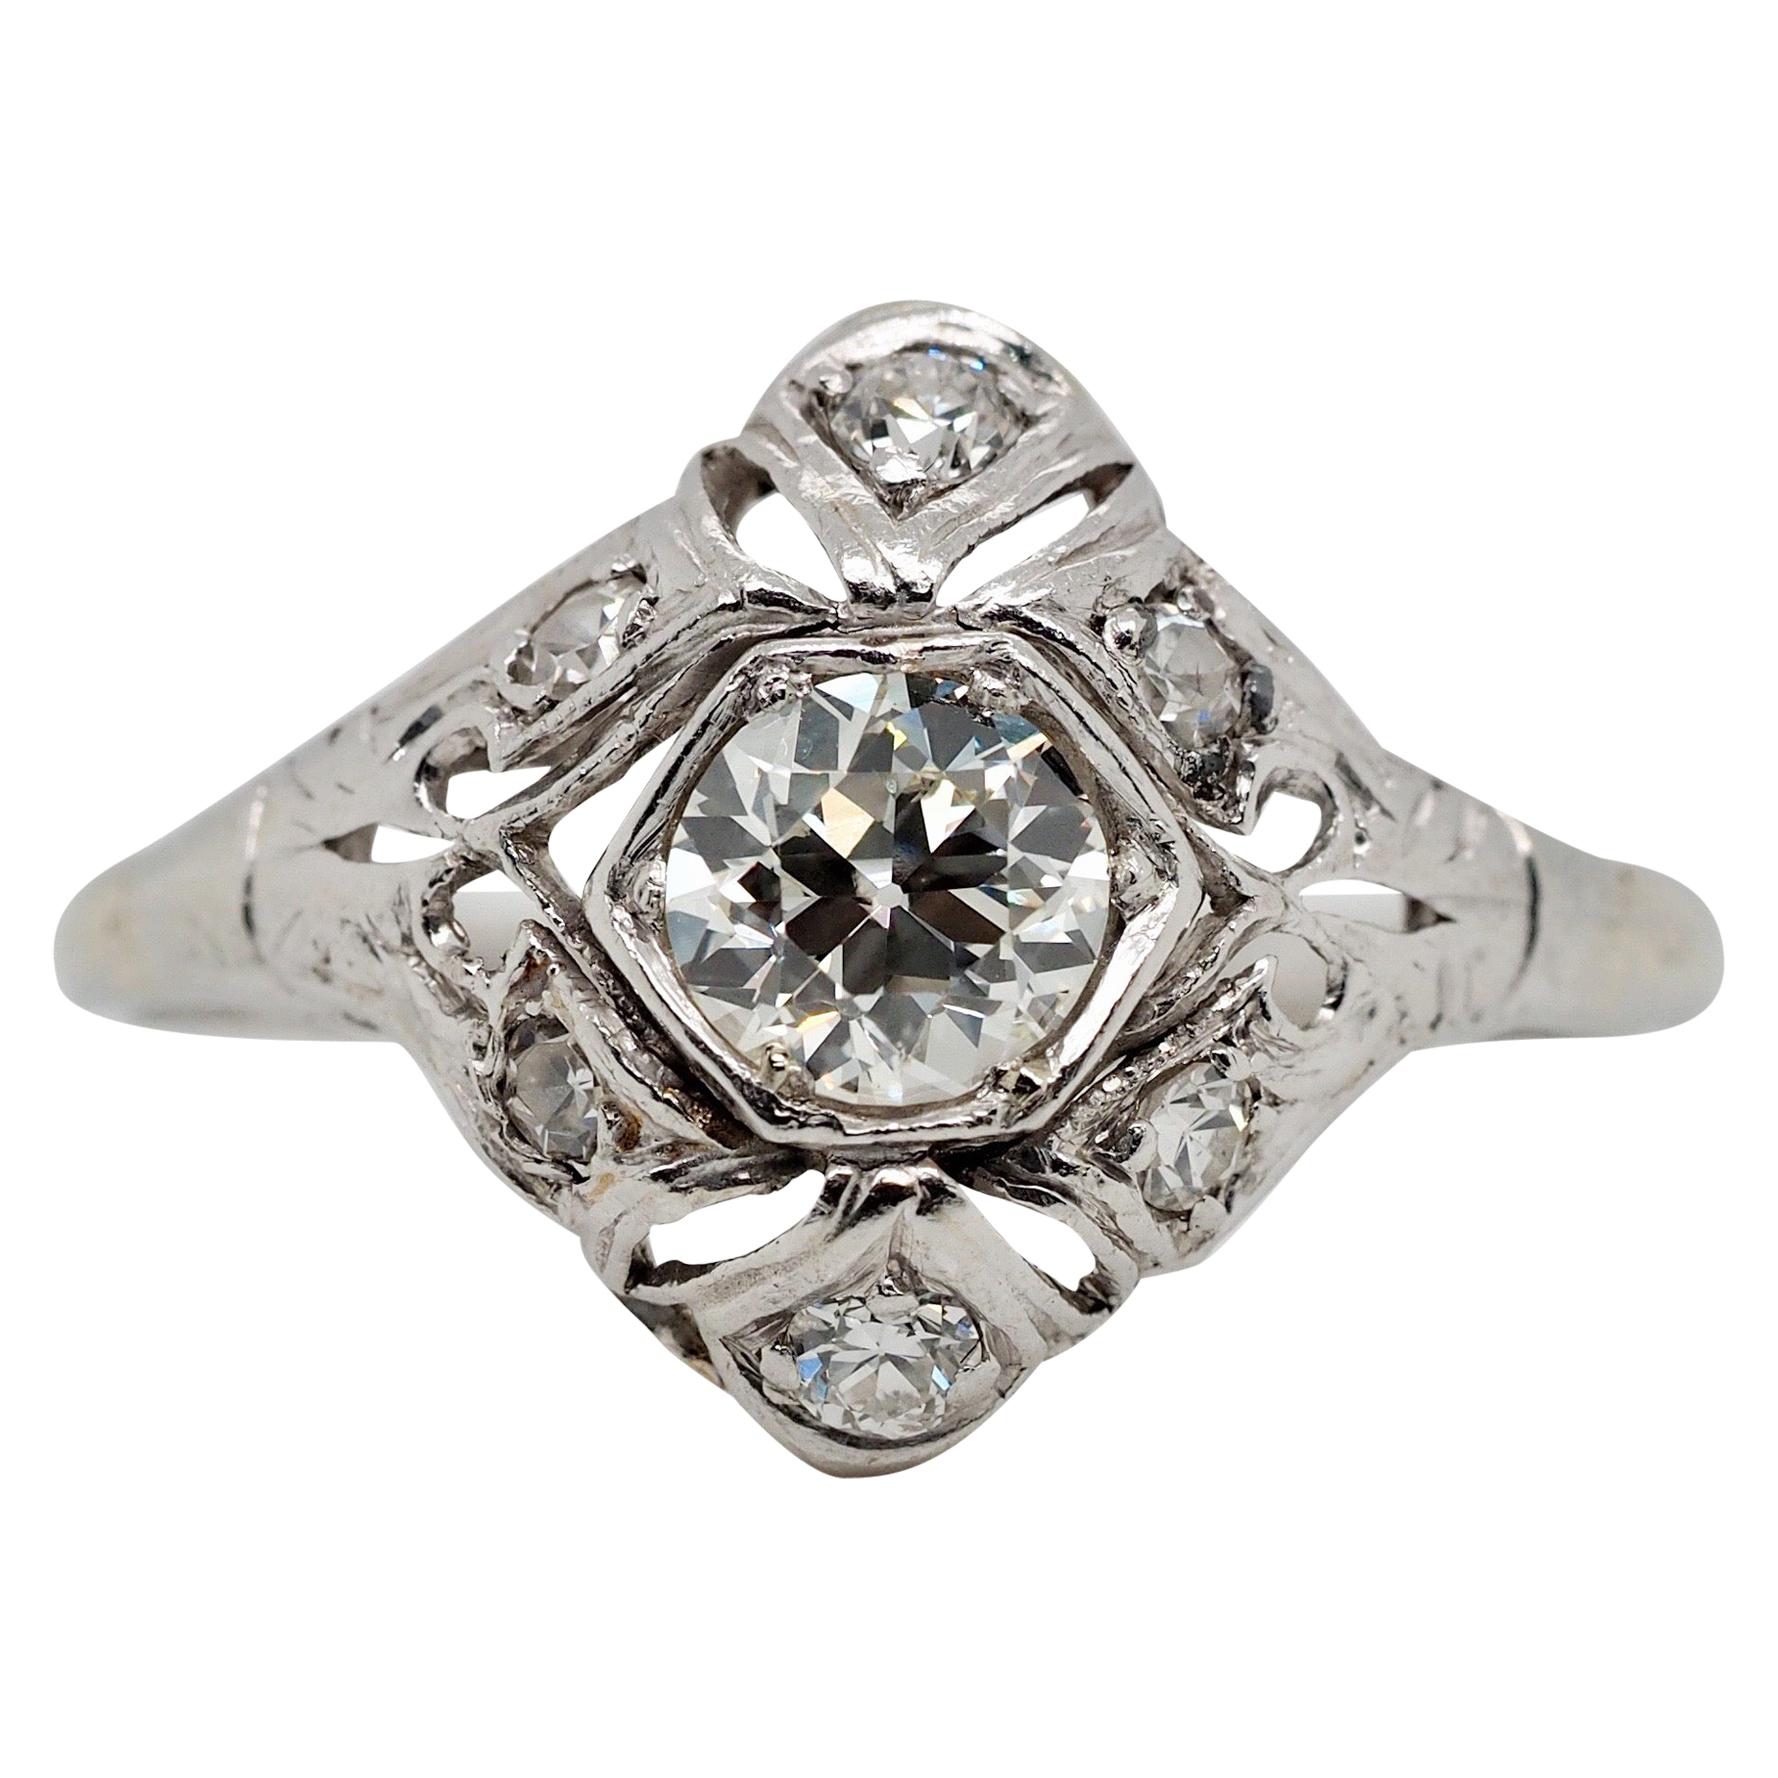 Vintage 18 Karat Art Deco Carat Diamond Ring, circa 1920s